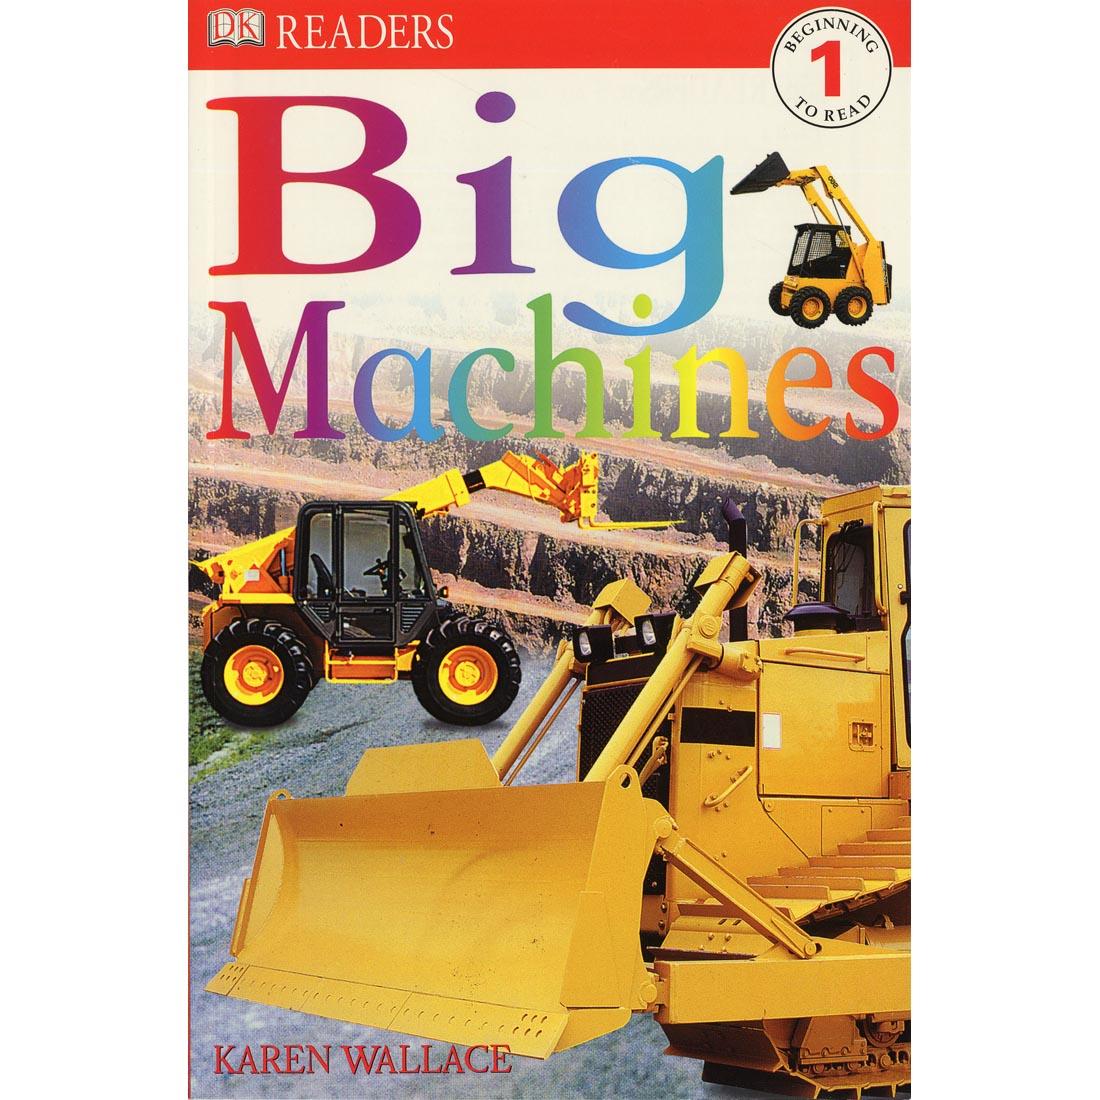 DK Readers Level 1 Book: Big Machines